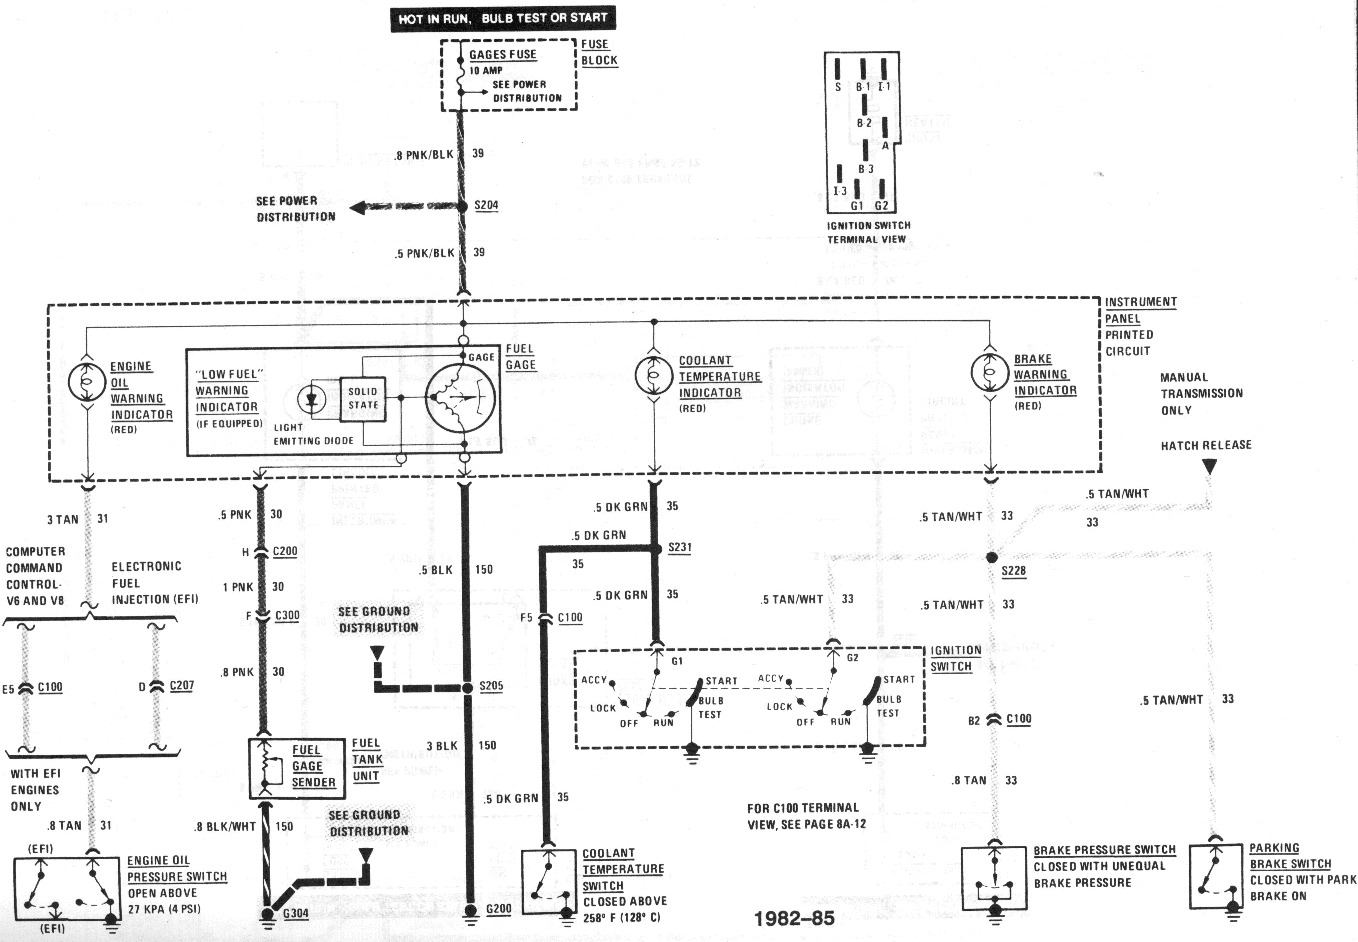 Diagram Chevy C10 Fuel Gauge Wiring Diagram Full Version Hd Quality Wiring Diagram Bdgwiring 8ktv Fr